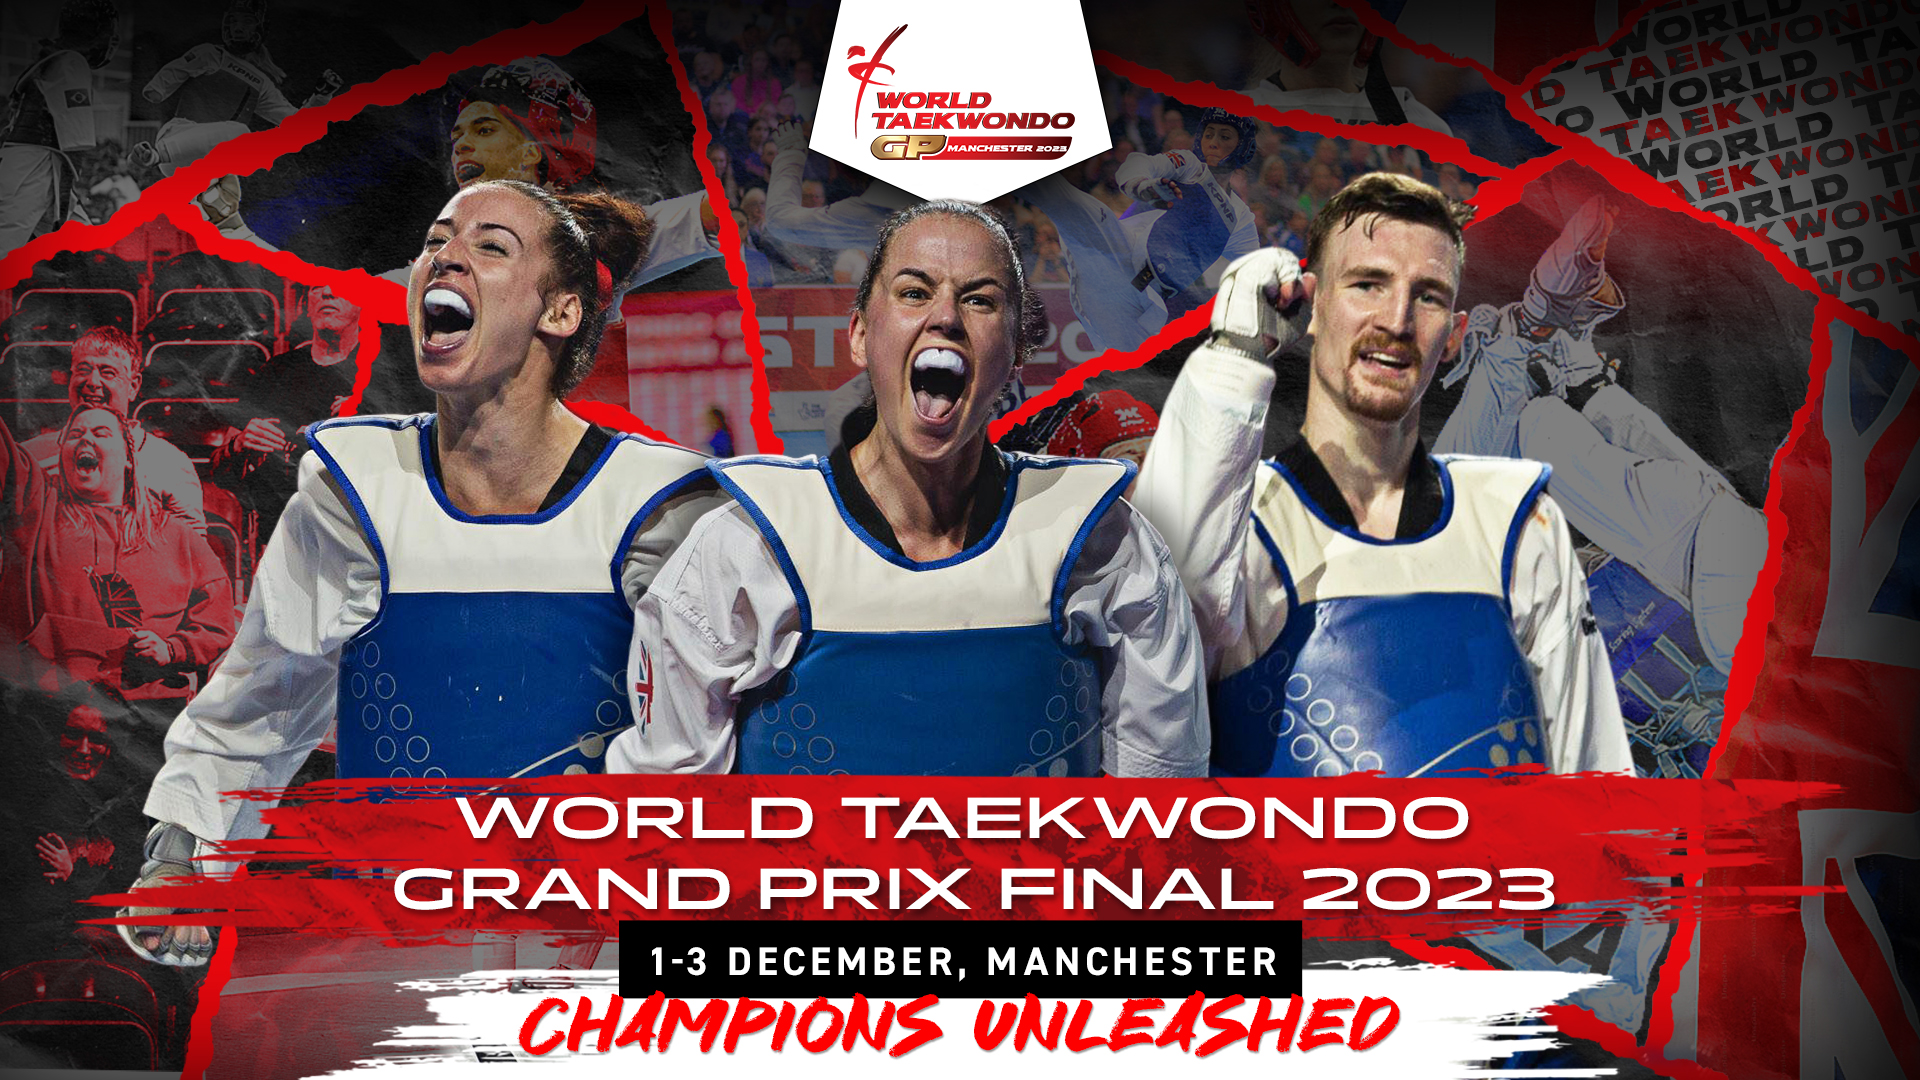 Manchester 2023 World Taekwondo Grand Prix Final